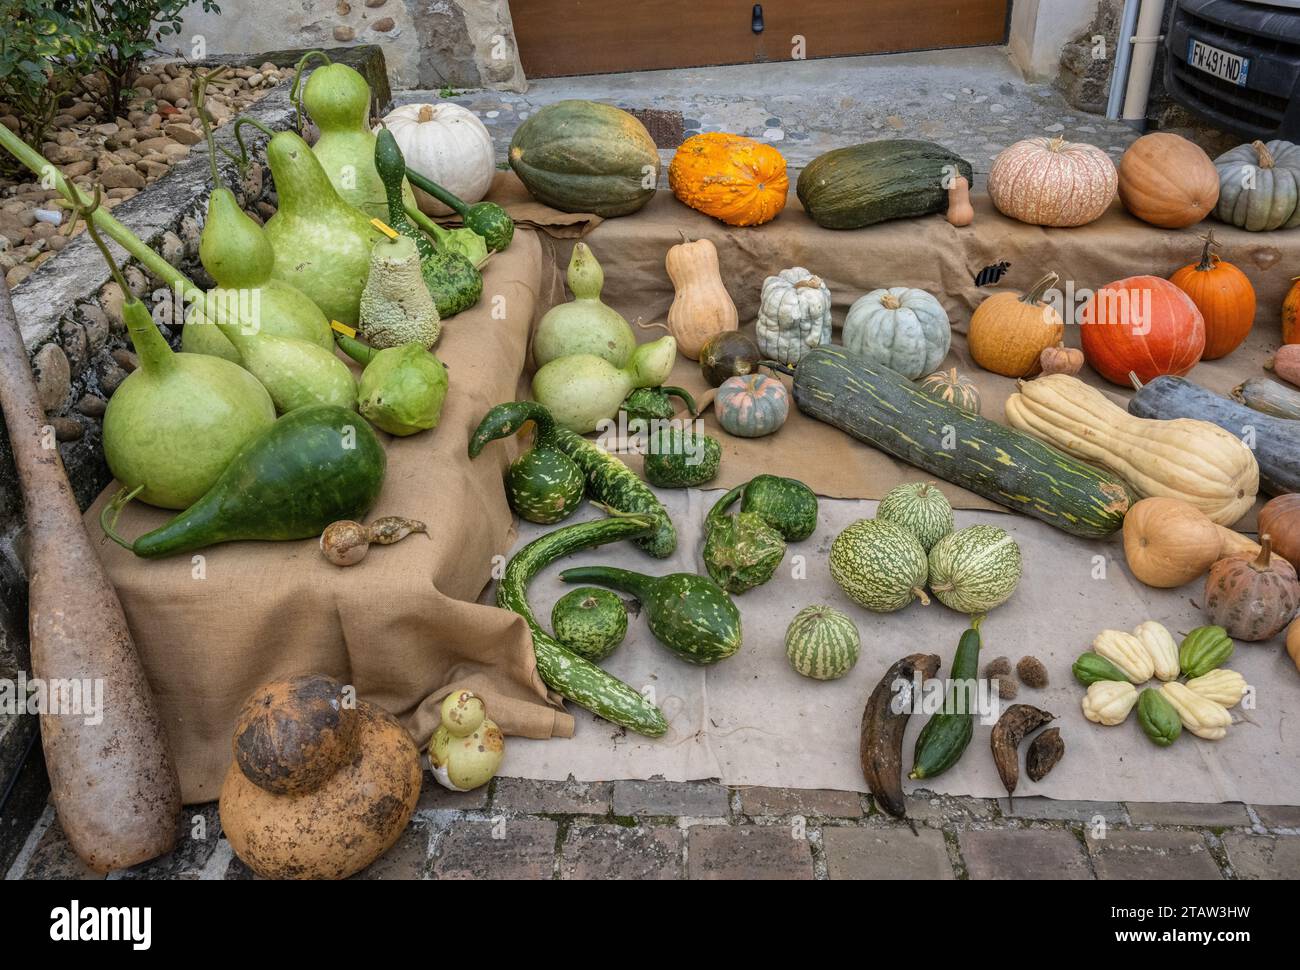 Mixed pumpkins on display at the Autumn festival market, Saint Antoine l'Abbaye, Isère, France, Stock Photo